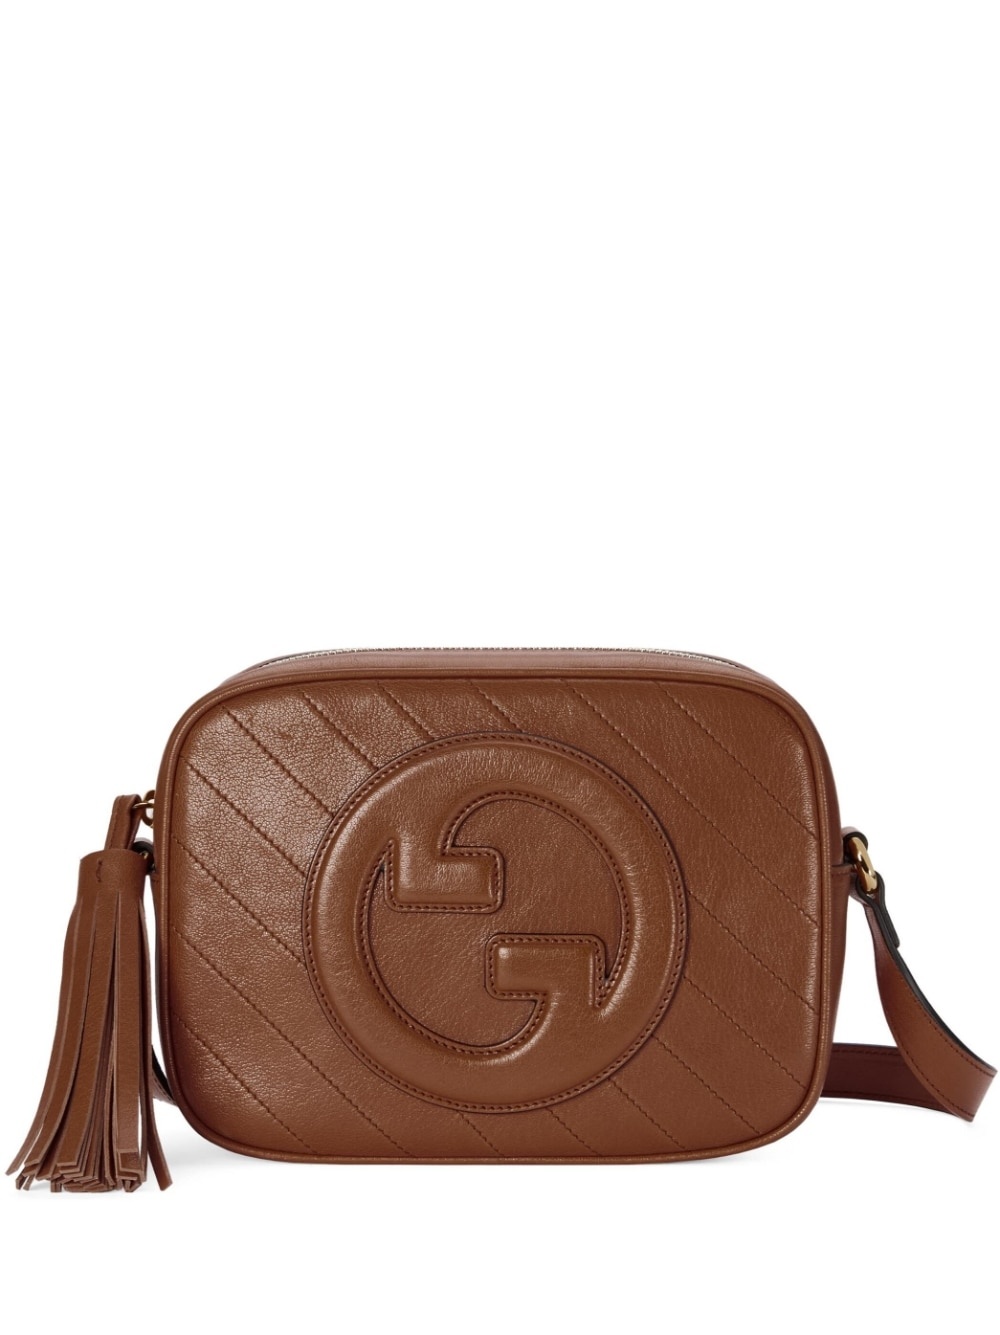 Blondie leather crossbody bag - 1